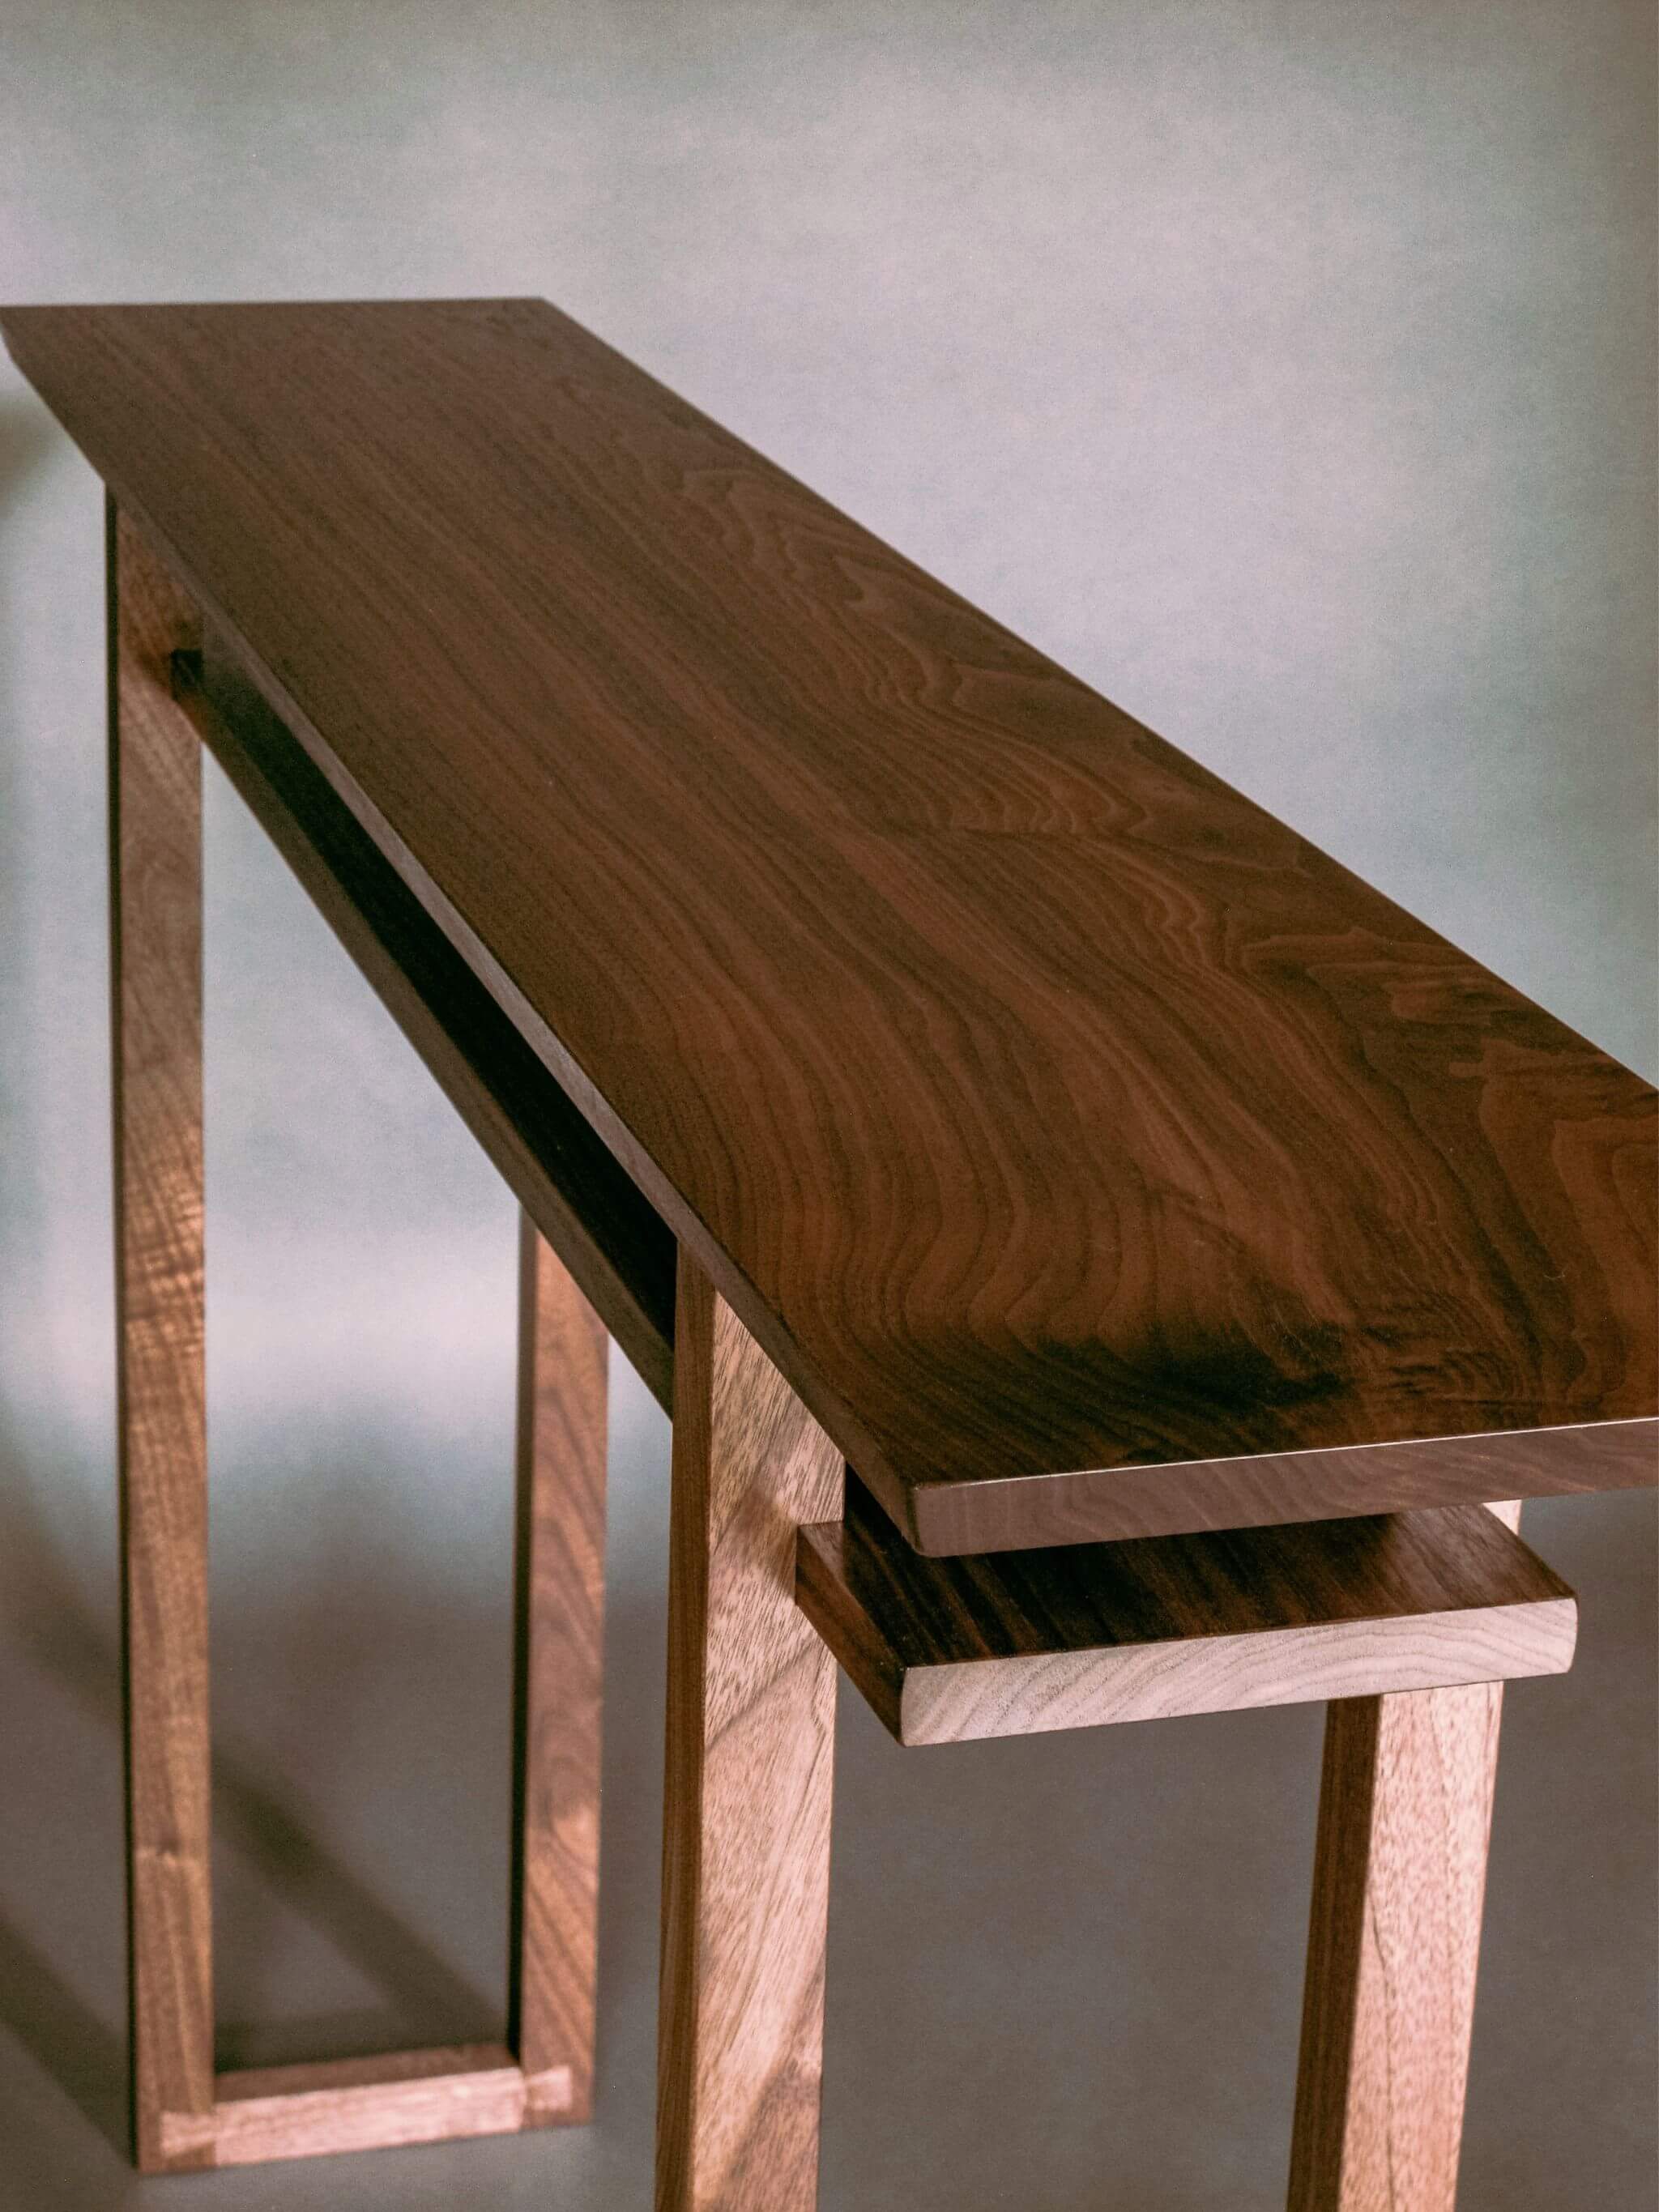 Statement Altar Table - minimalist zen podium, lectern